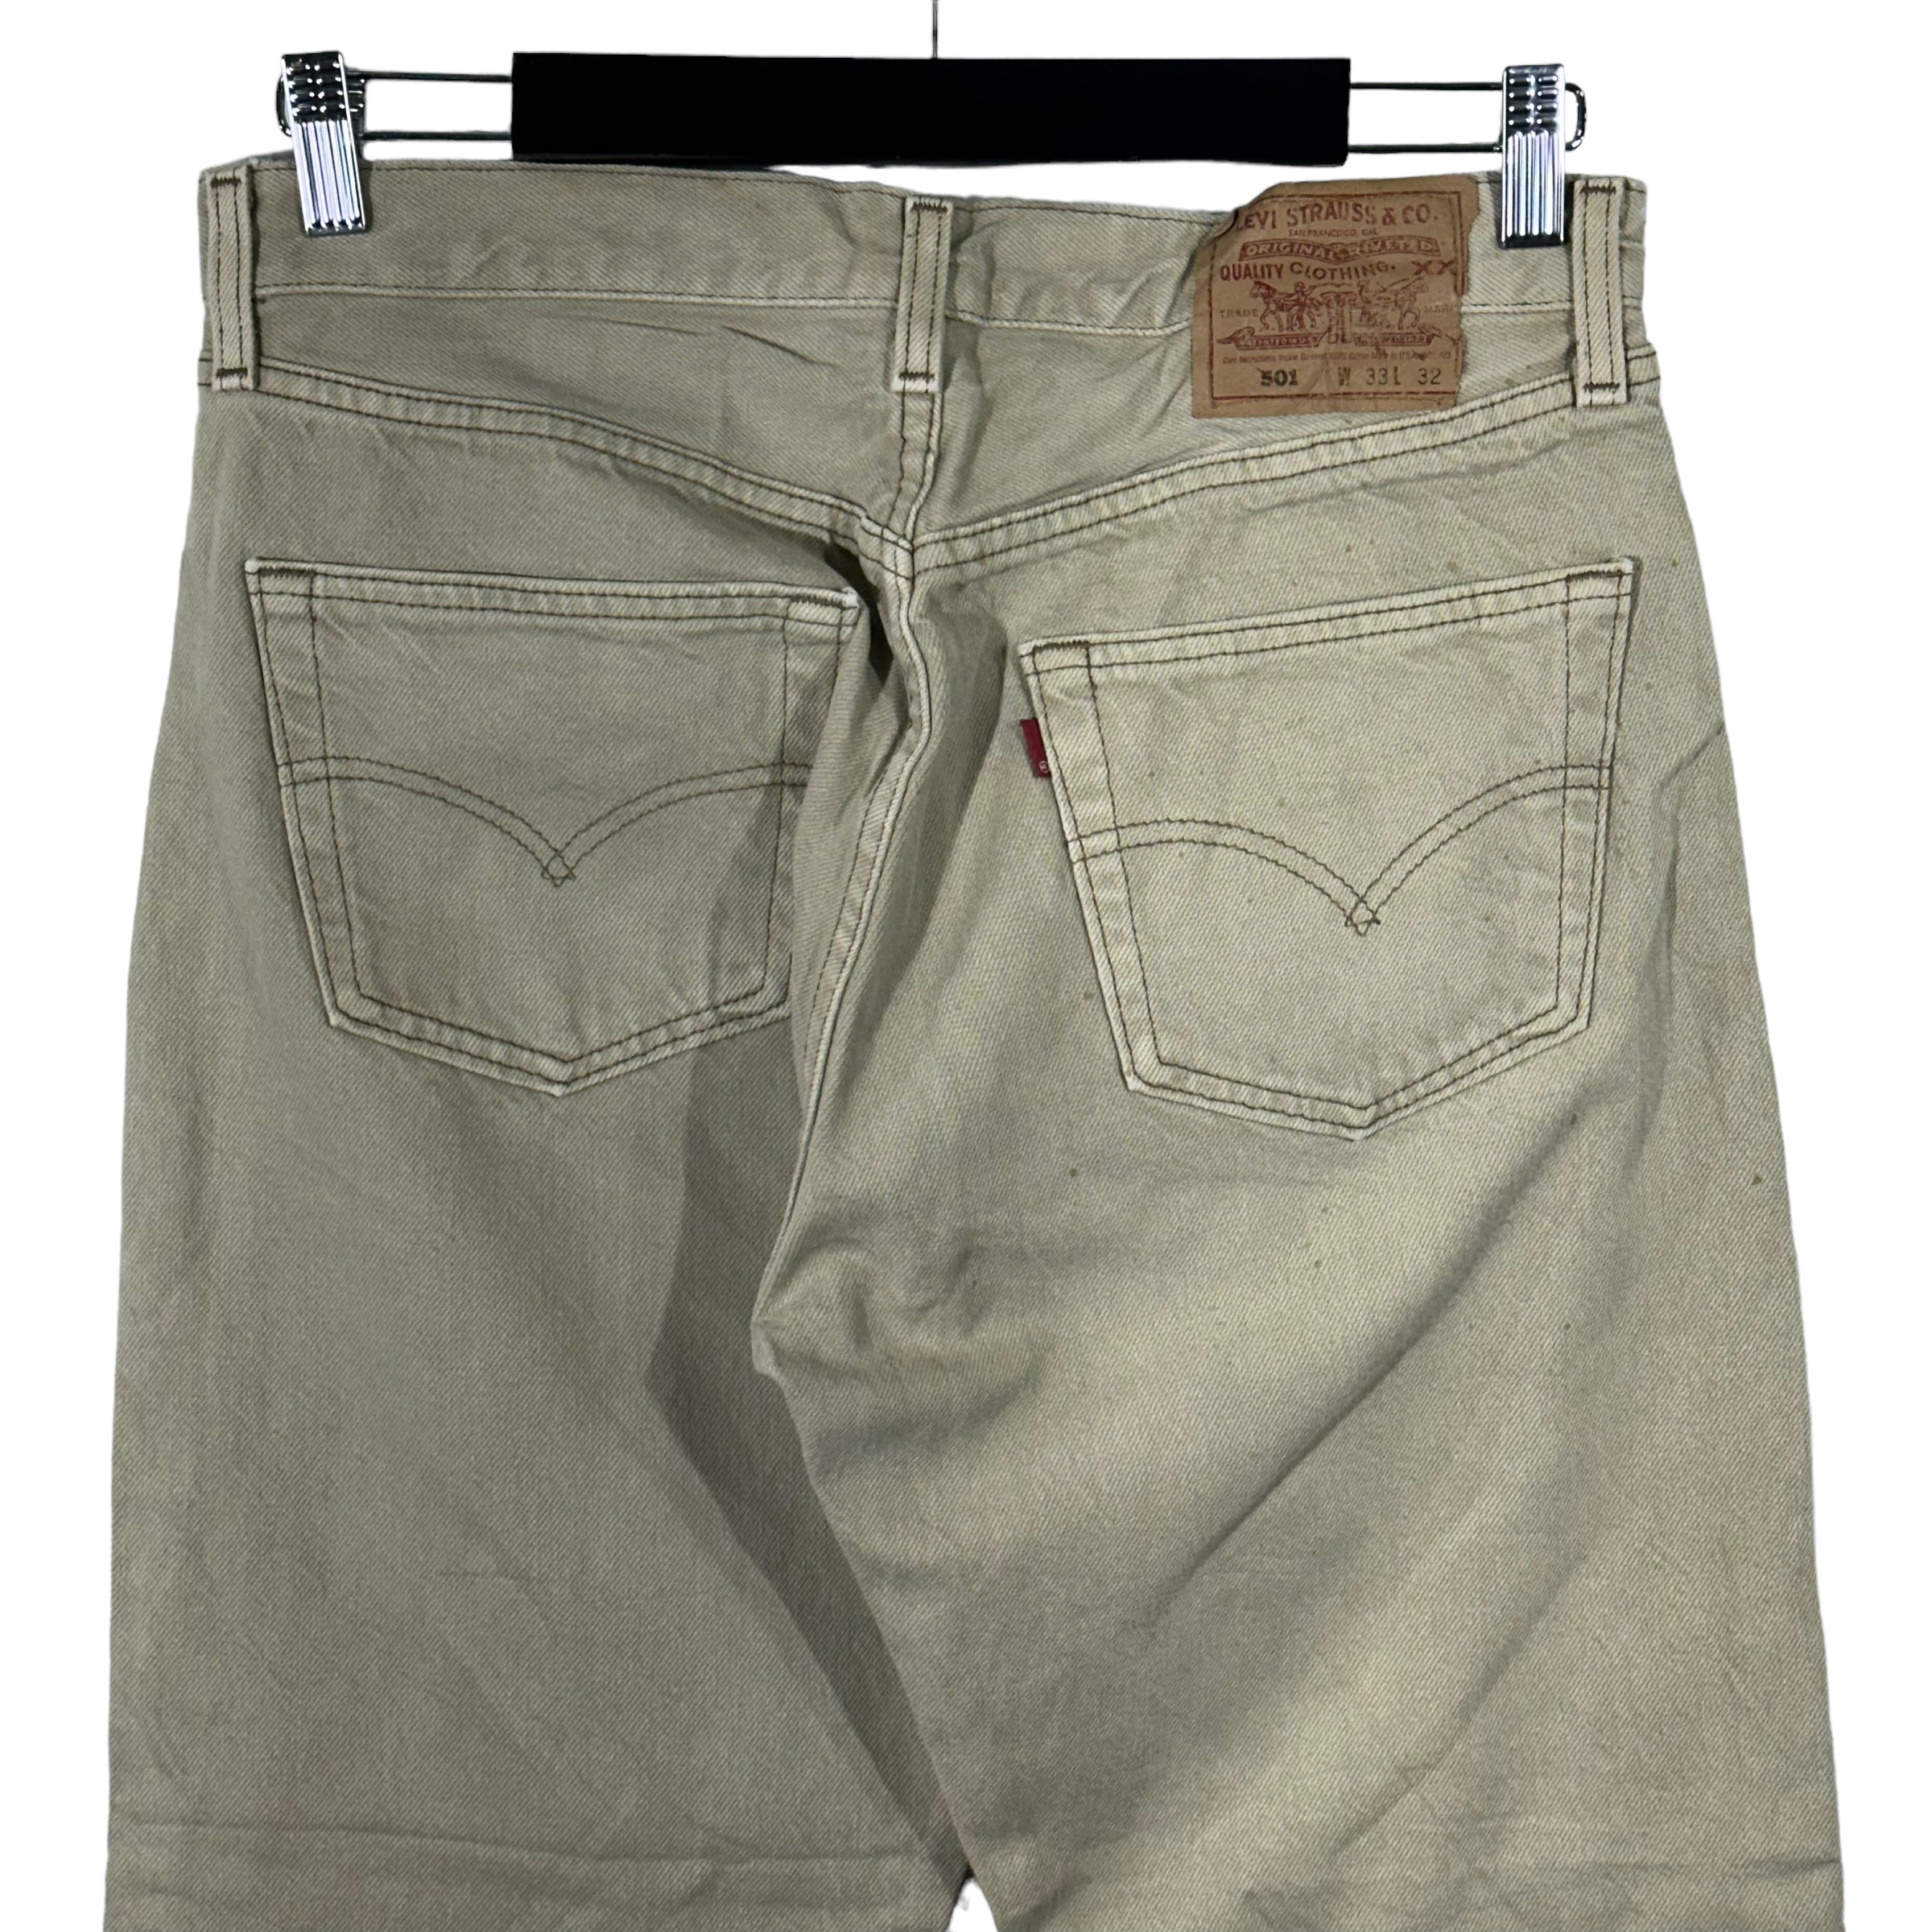 Vintage Levi's 501 Khaki Denim Pants 90s